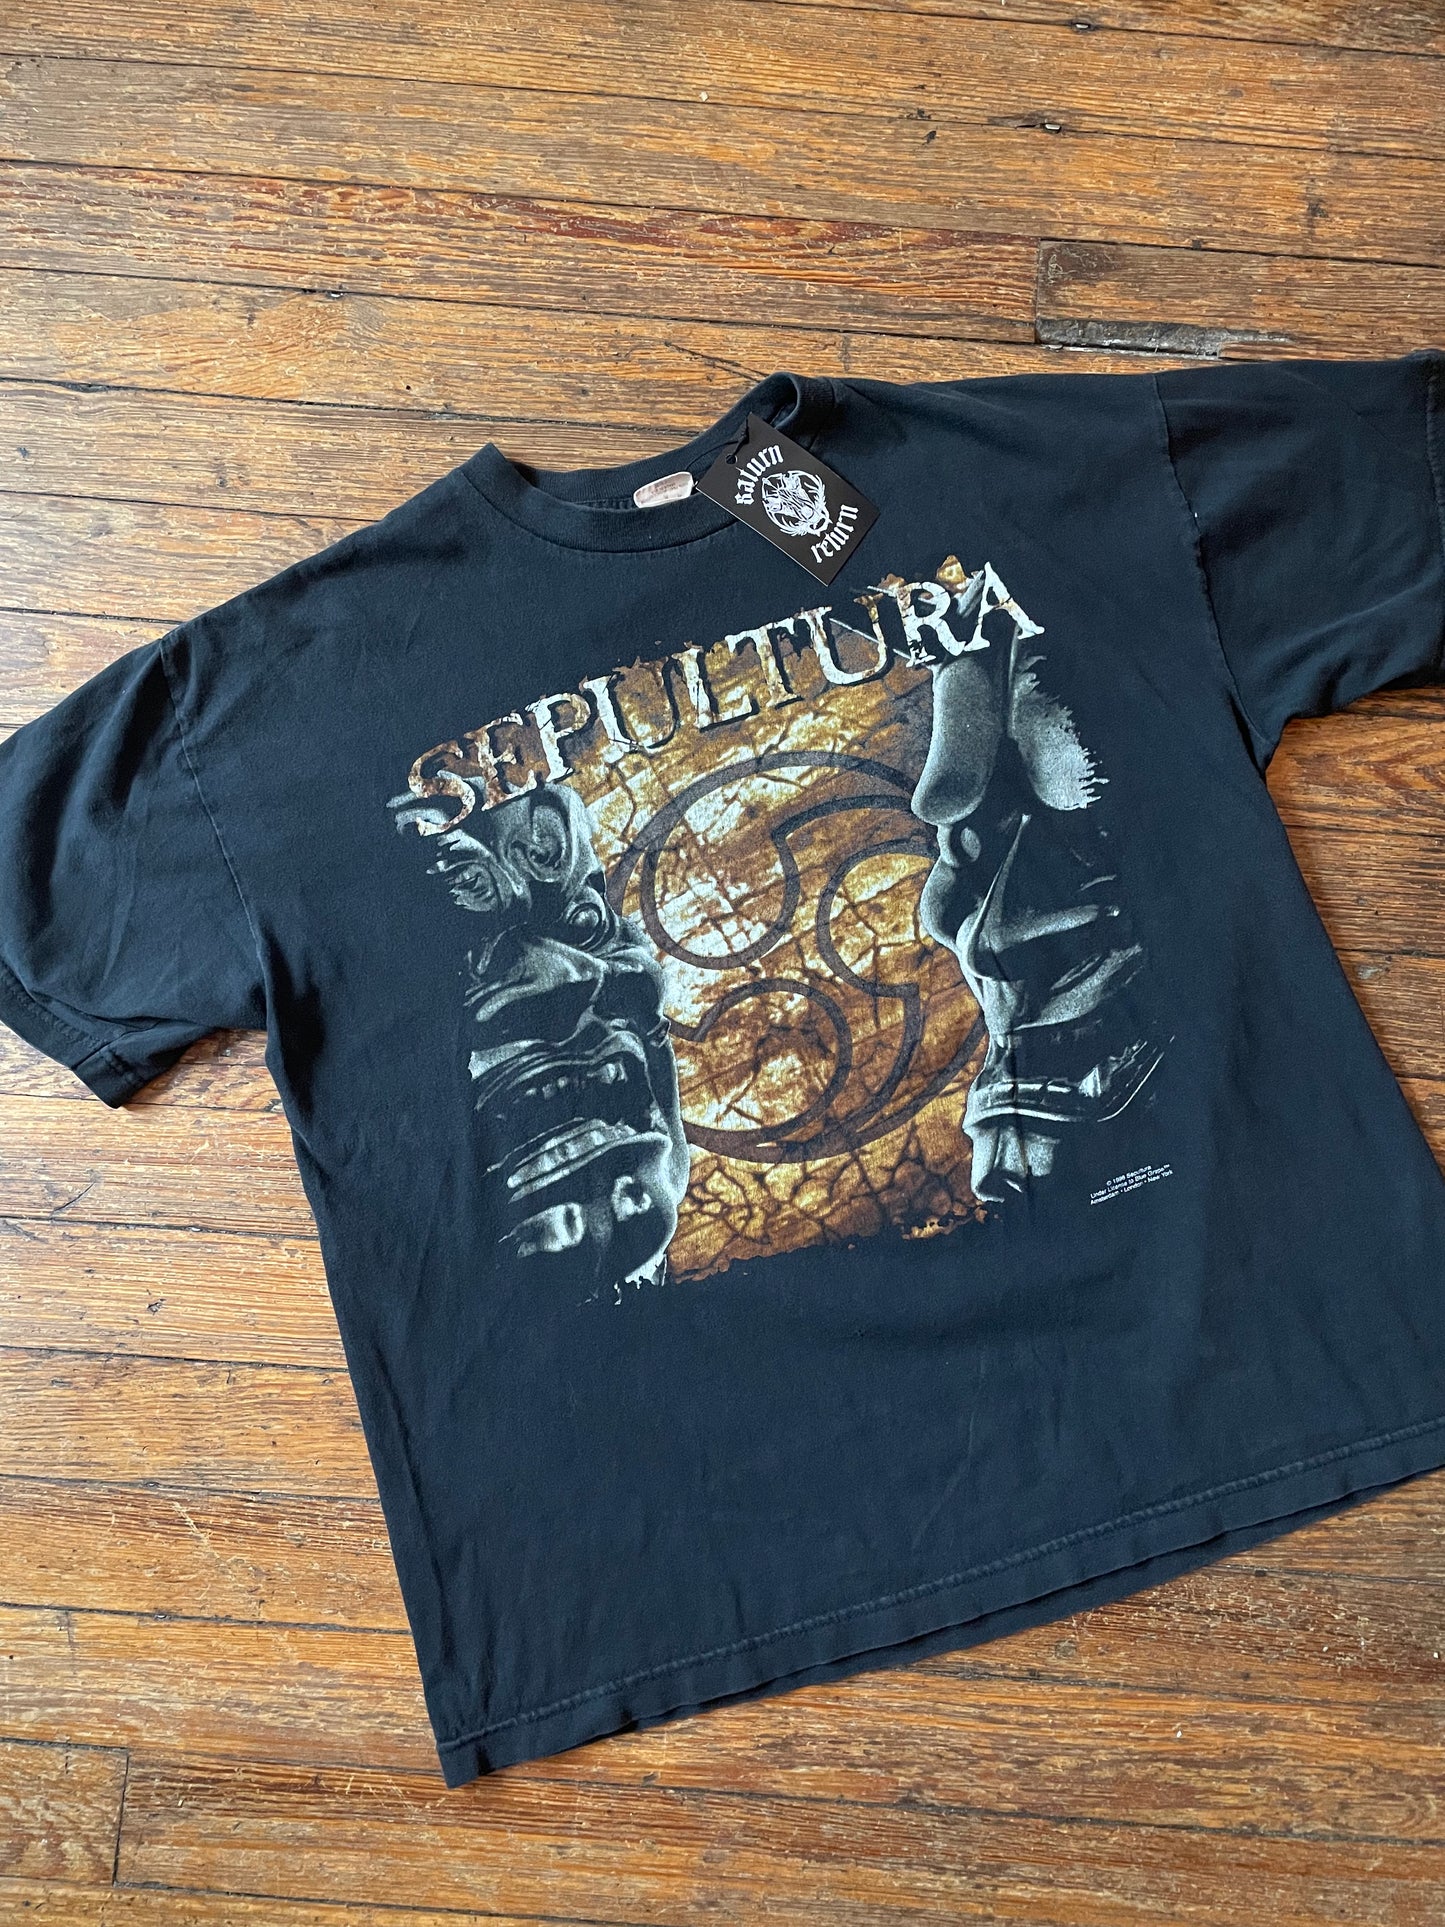 Vintage 1998 Sepultura Against T-Shirt